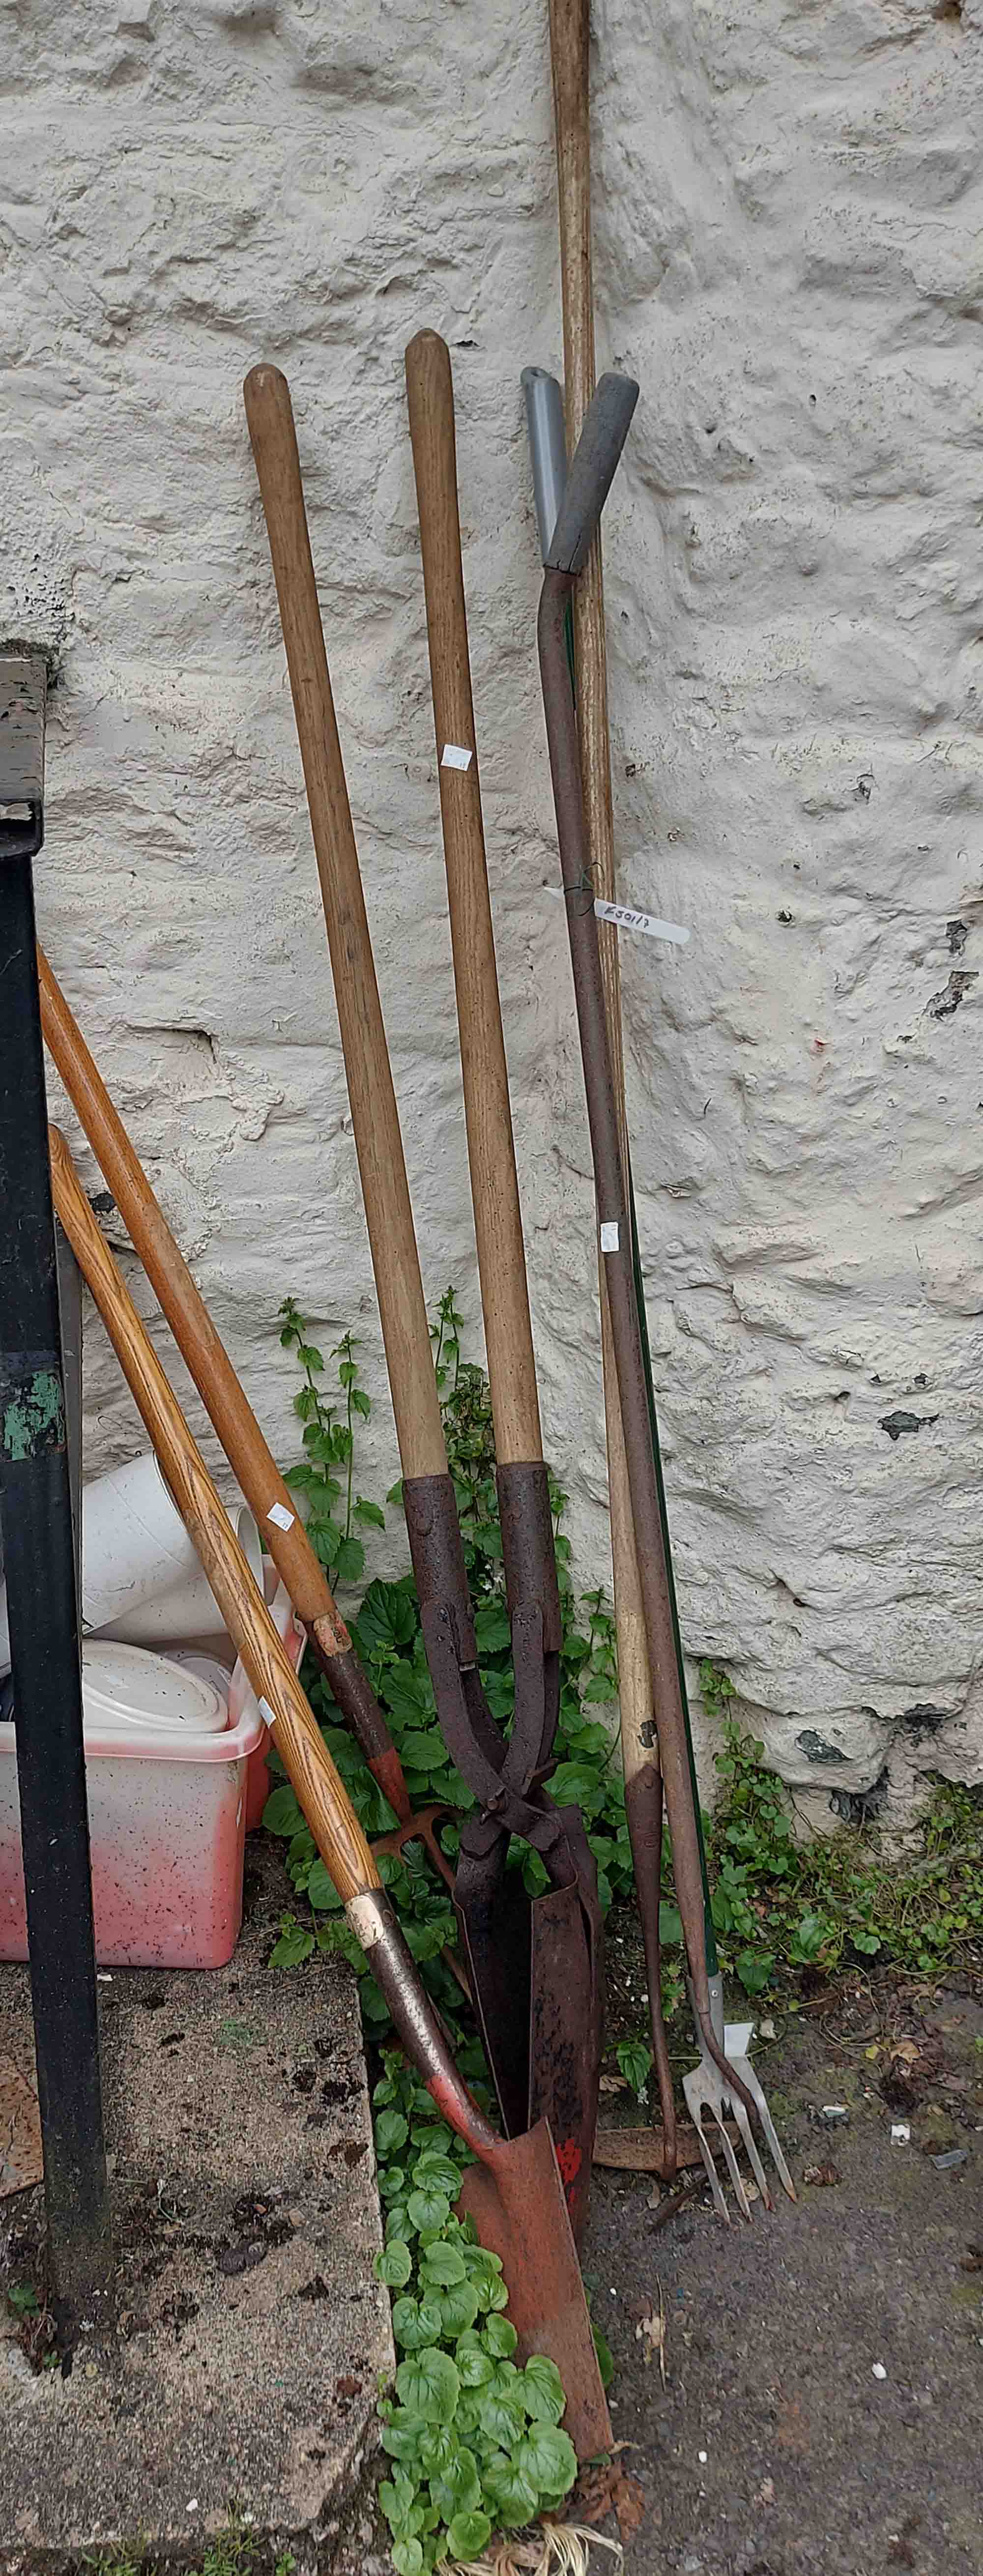 A quantity of vintage garden tools